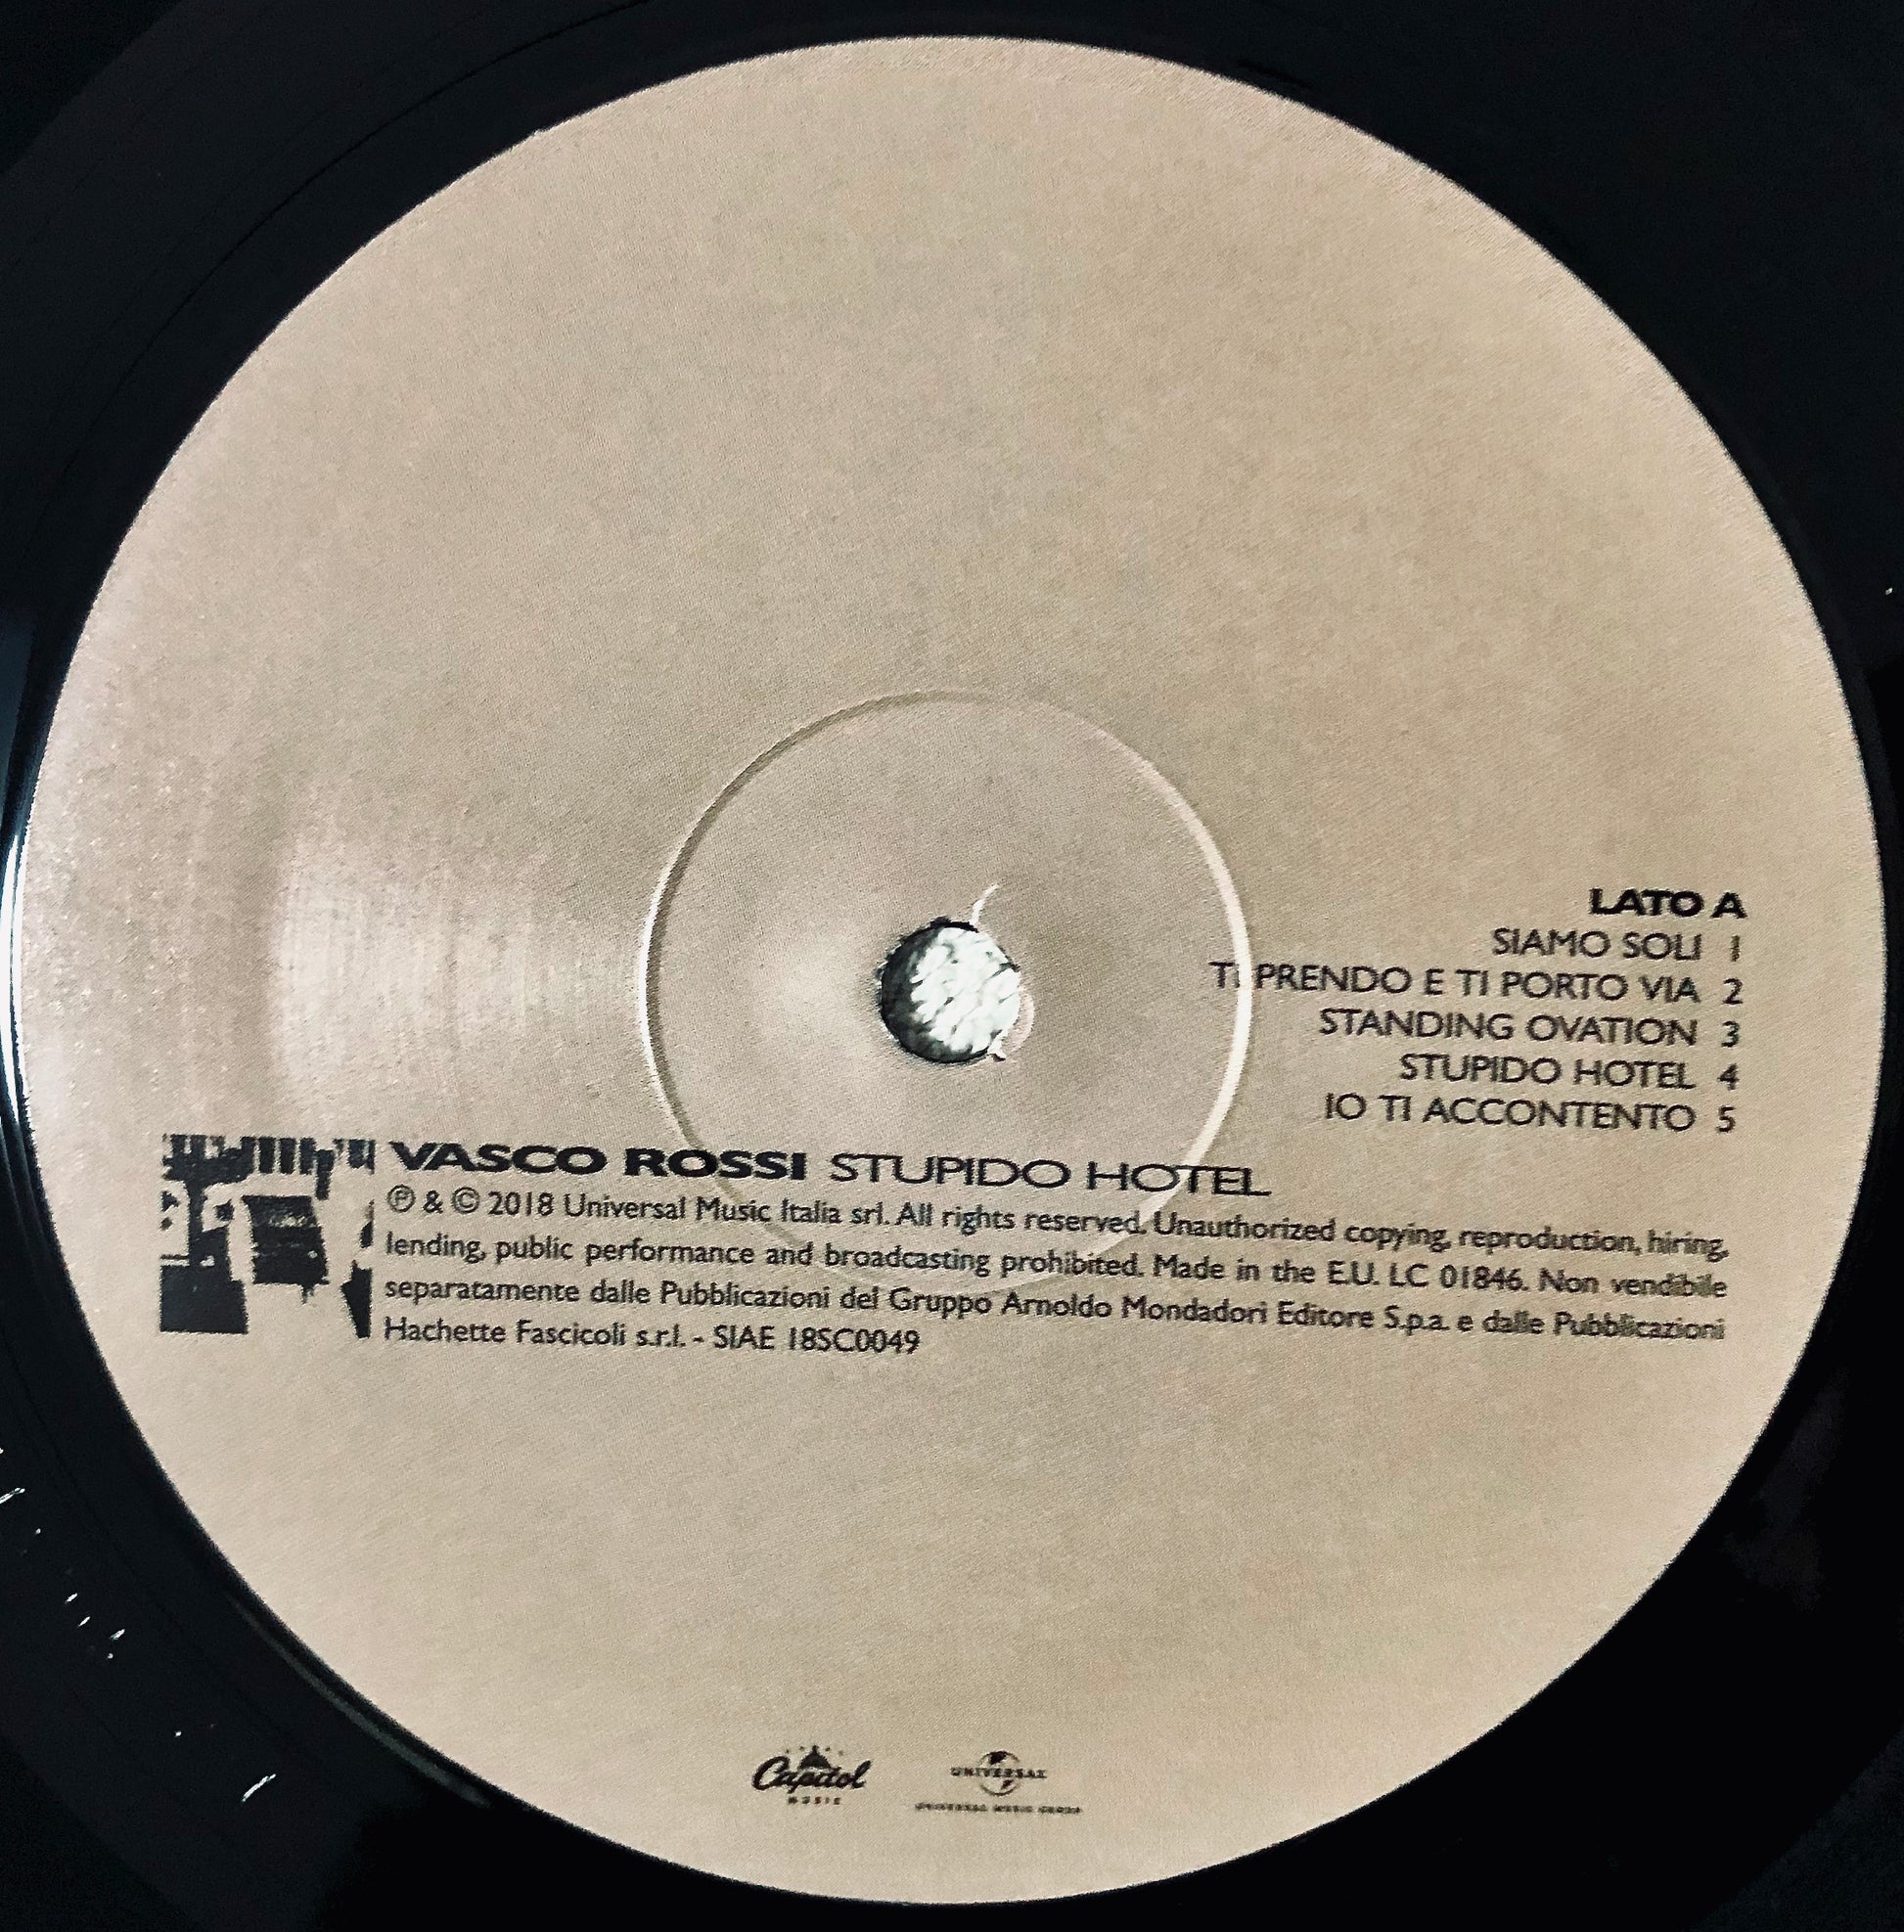 Stupido Hotel - Vasco Rossi @ S. Siro 03 (Remaster) - Vasco Rossi - CD